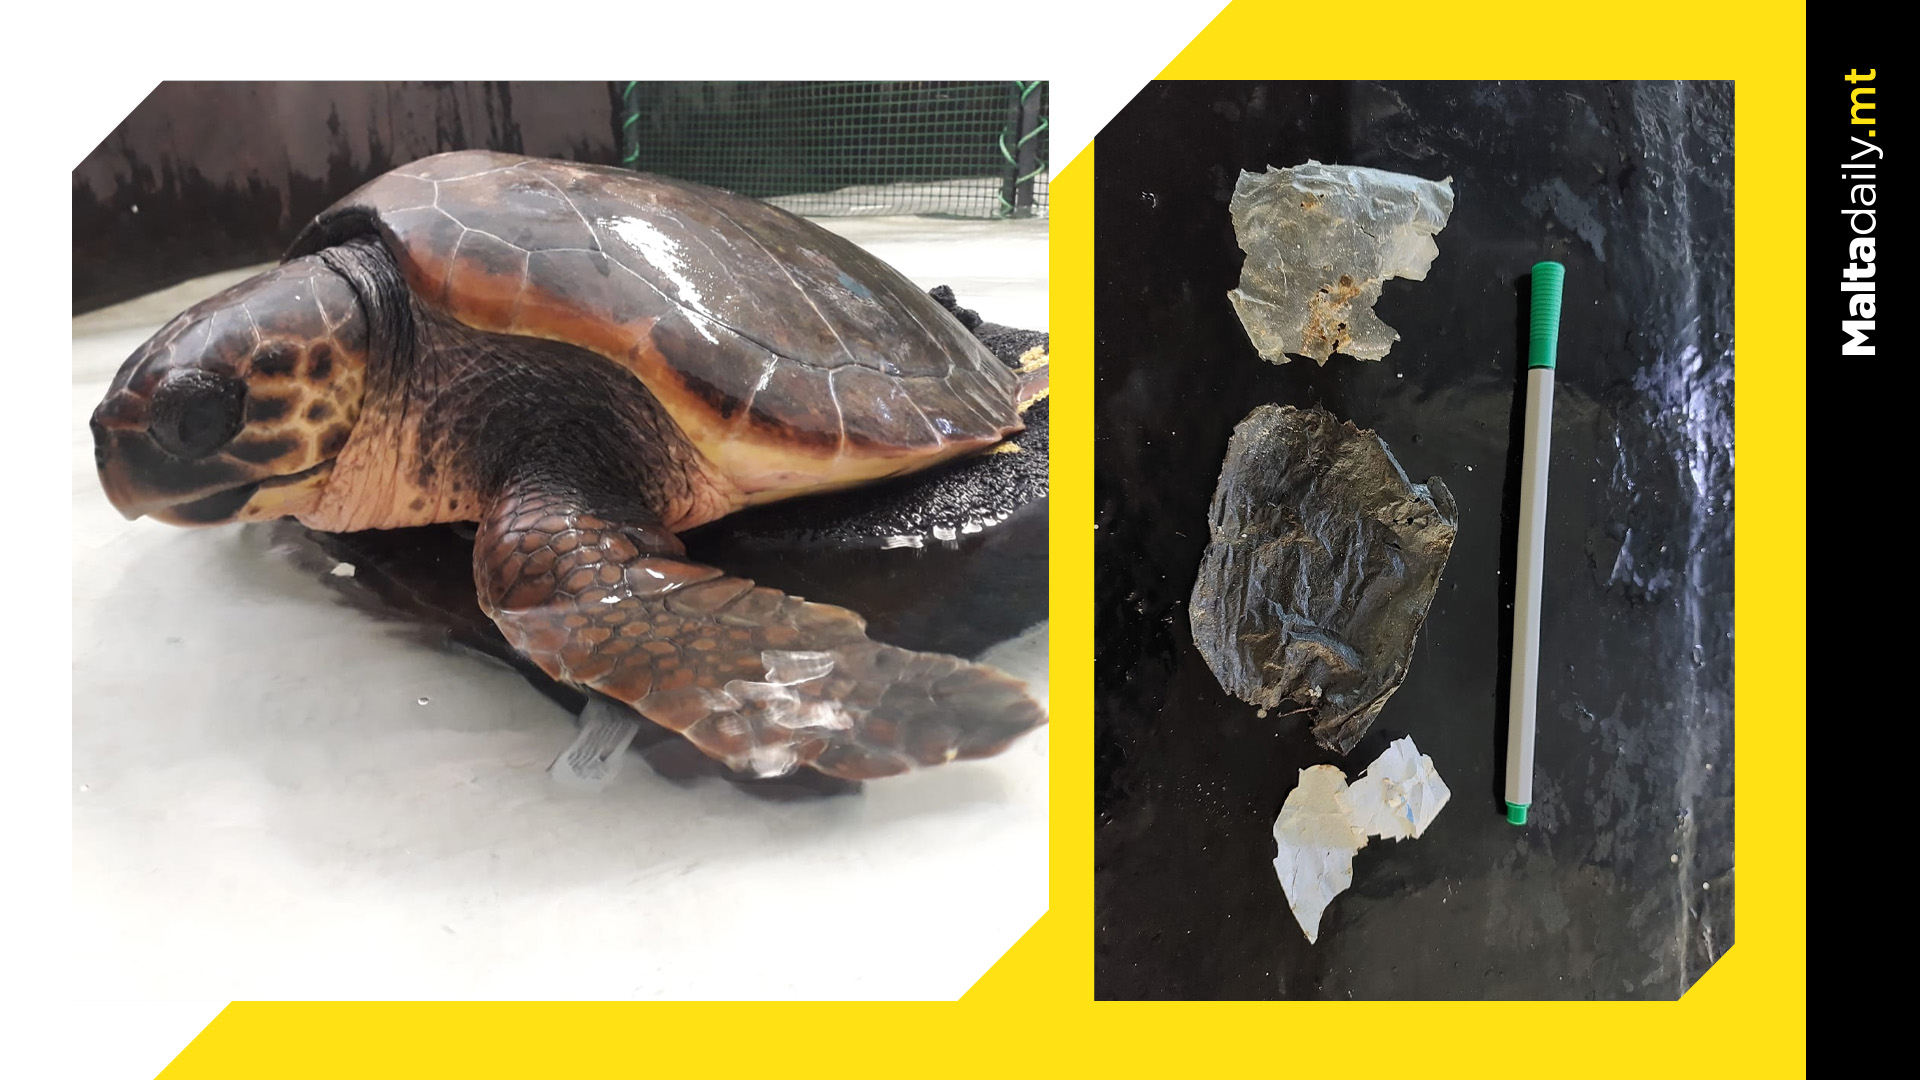 Rescued Sea Turtle 'Eva' Shines Light on Alarming Ocean Waste Situation